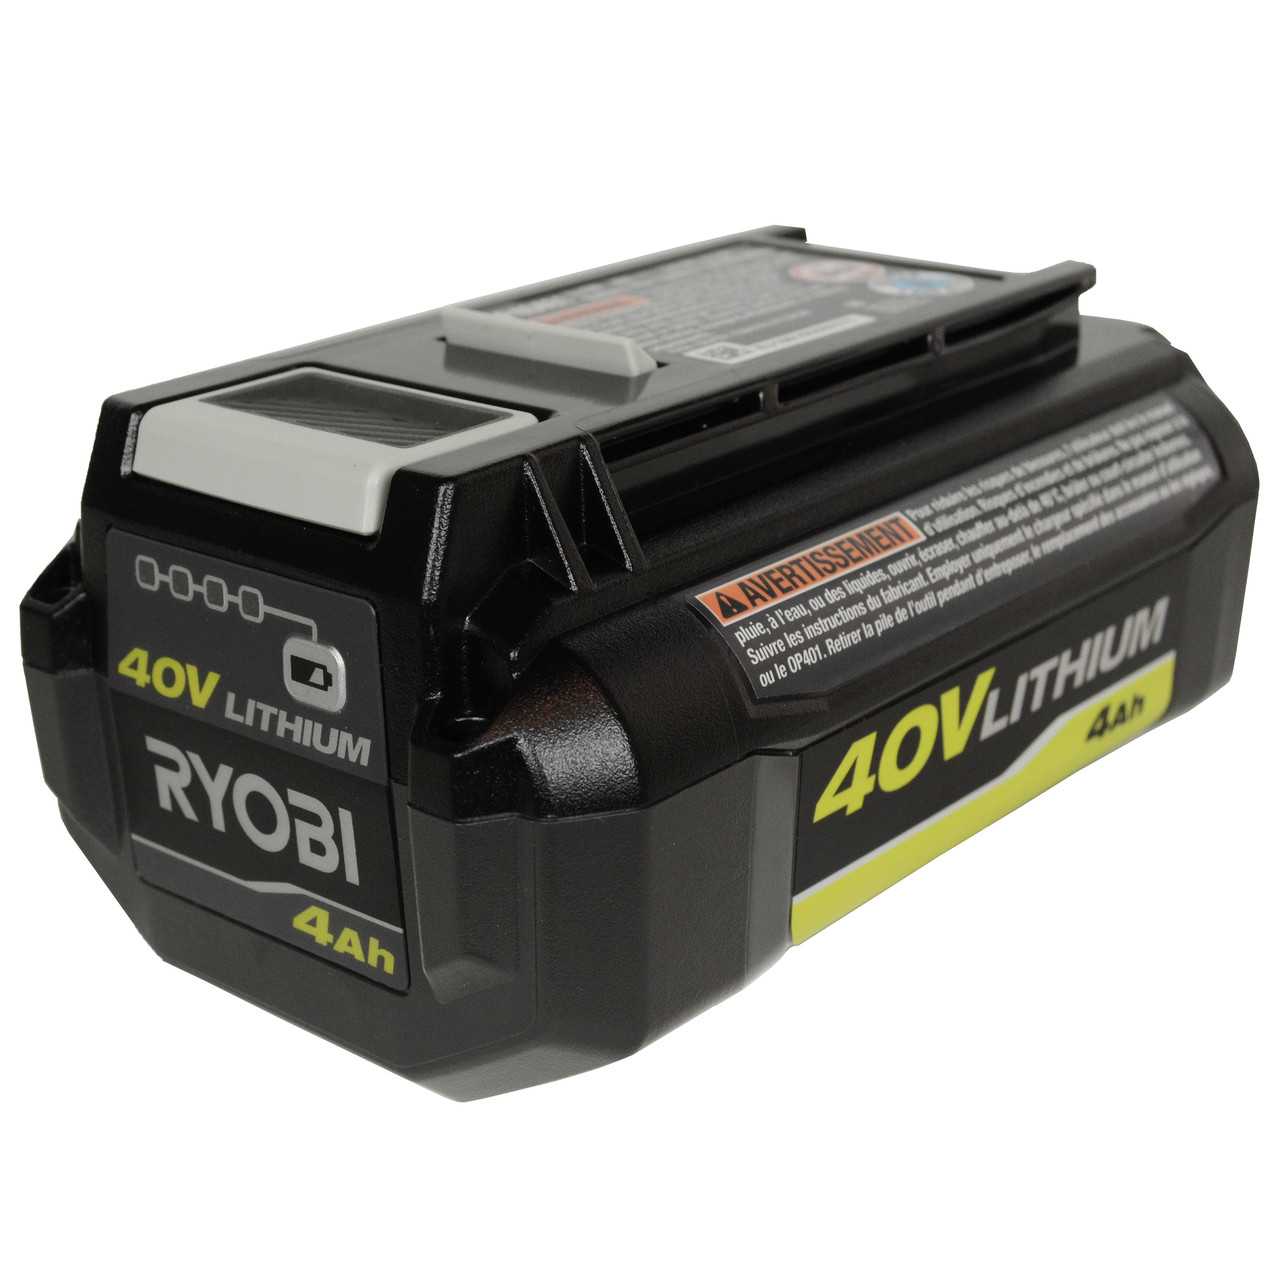 Ryobi 40v Battery Compatibility Chart